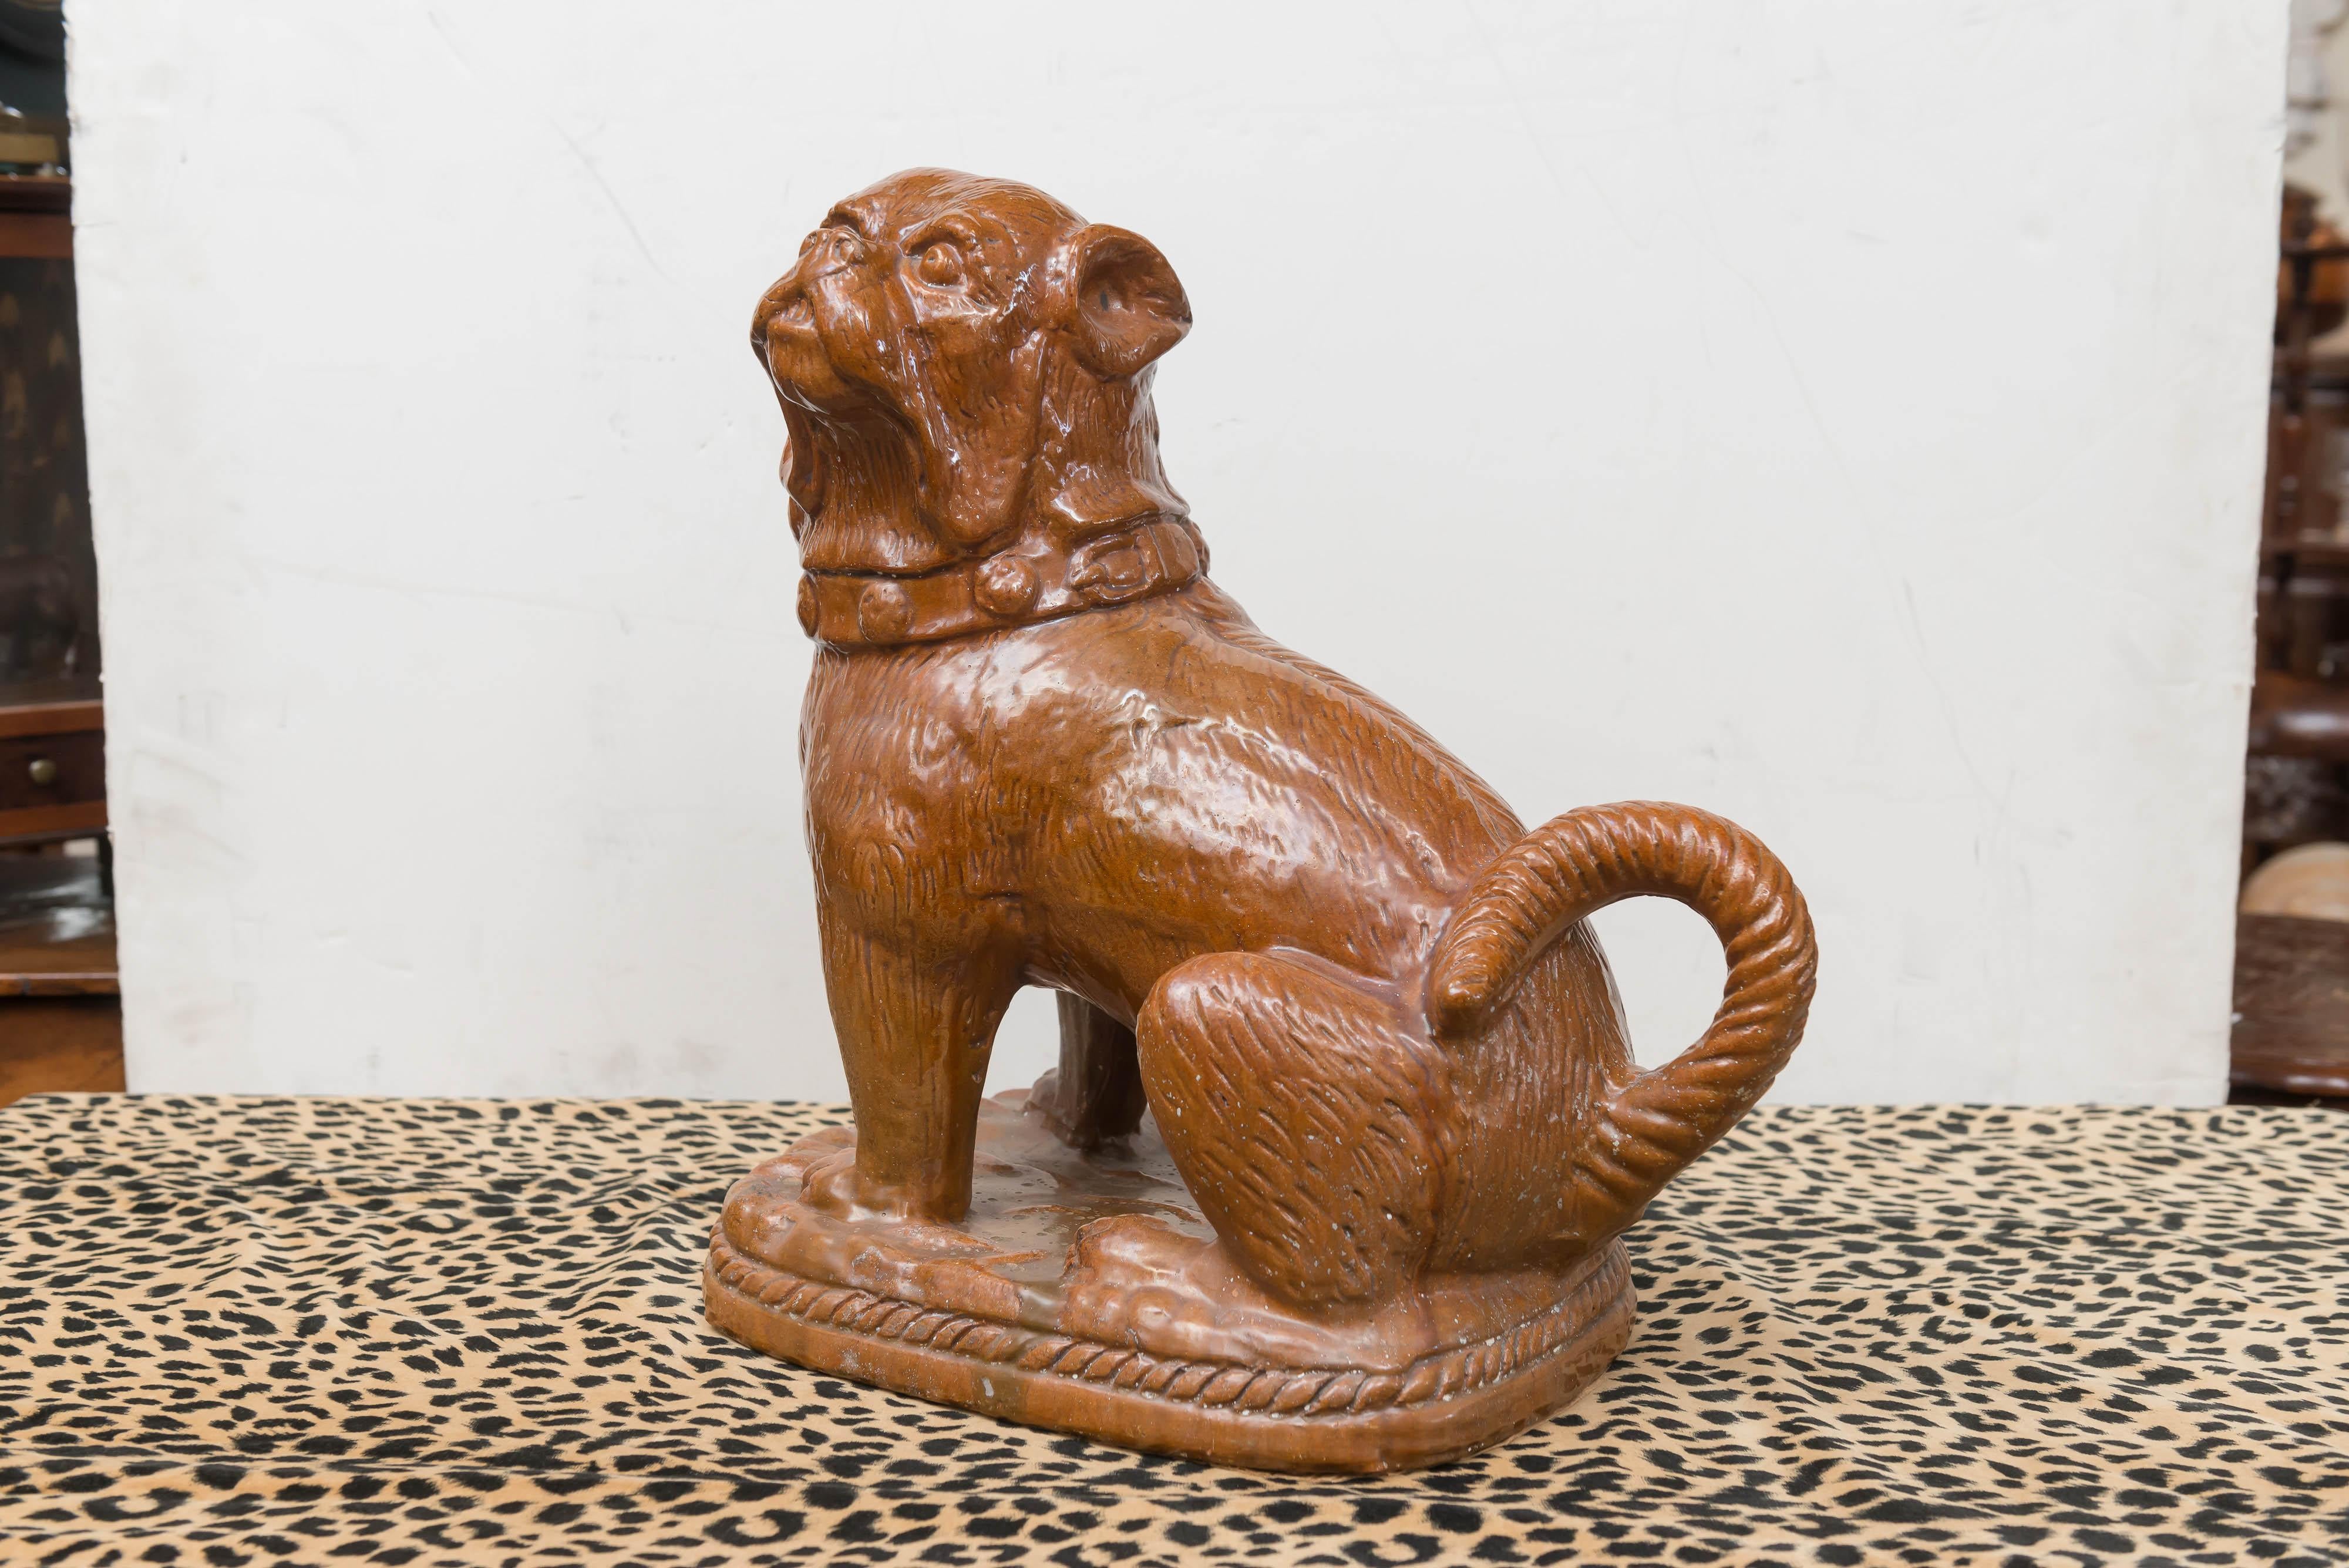 Folk Art Late 19th Century German Pug Dog, Heavy Terracotta with Brown Carmel Color Glaze For Sale